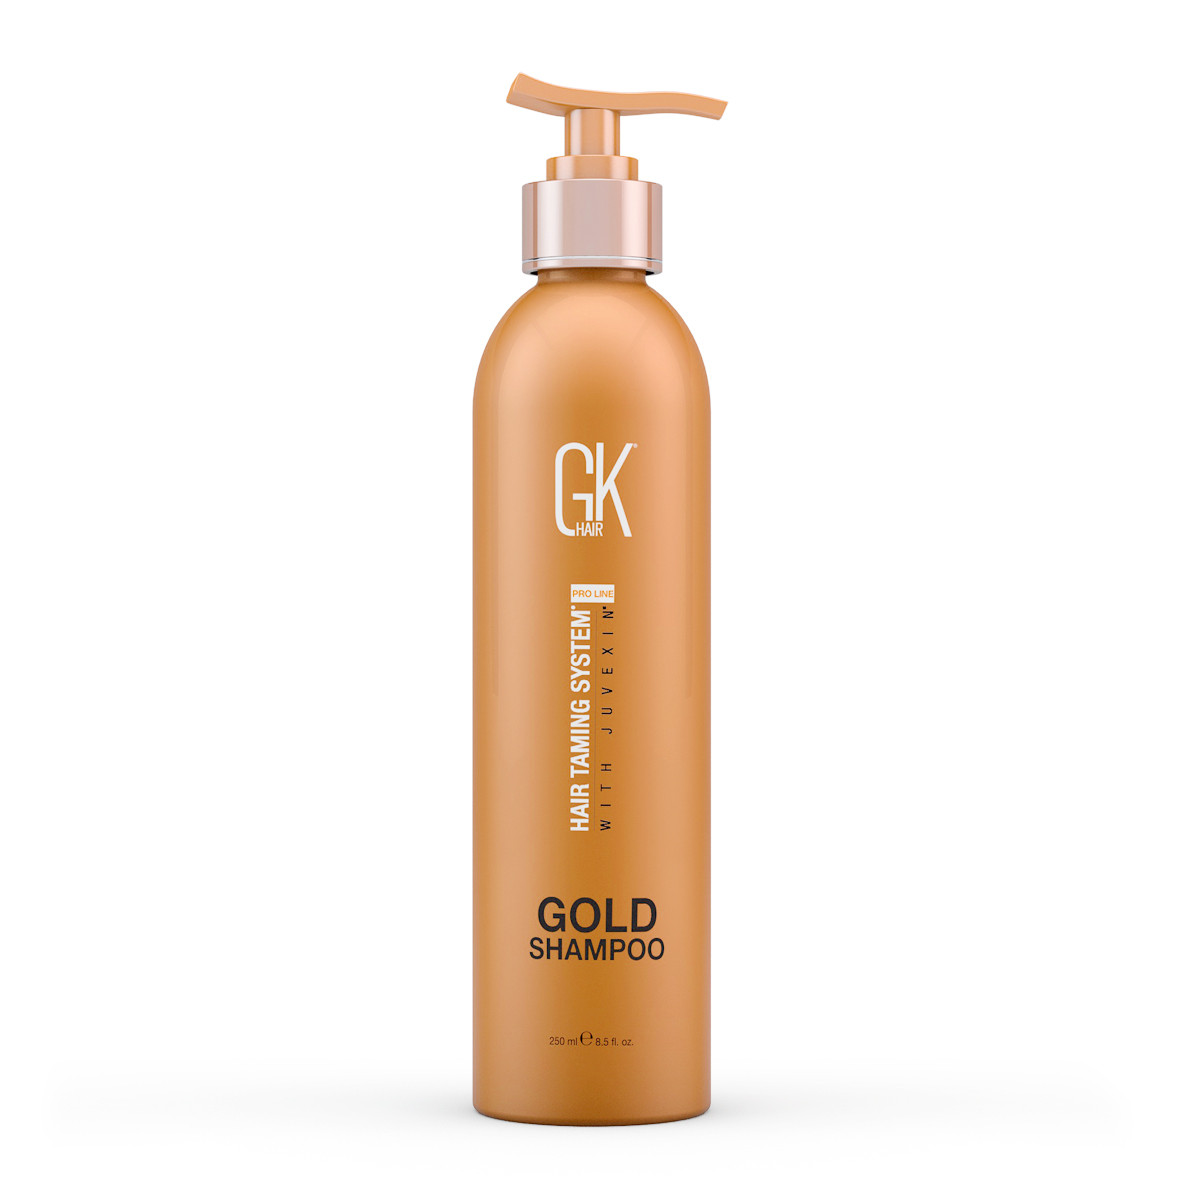 Gold шампунь. Global Keratin кондиционер золотой 250 мл. GKHAIR шампунь Gold золотой. GK hair Gold Shampoo 250ml. GK hair Gold Conditioner 250ml.